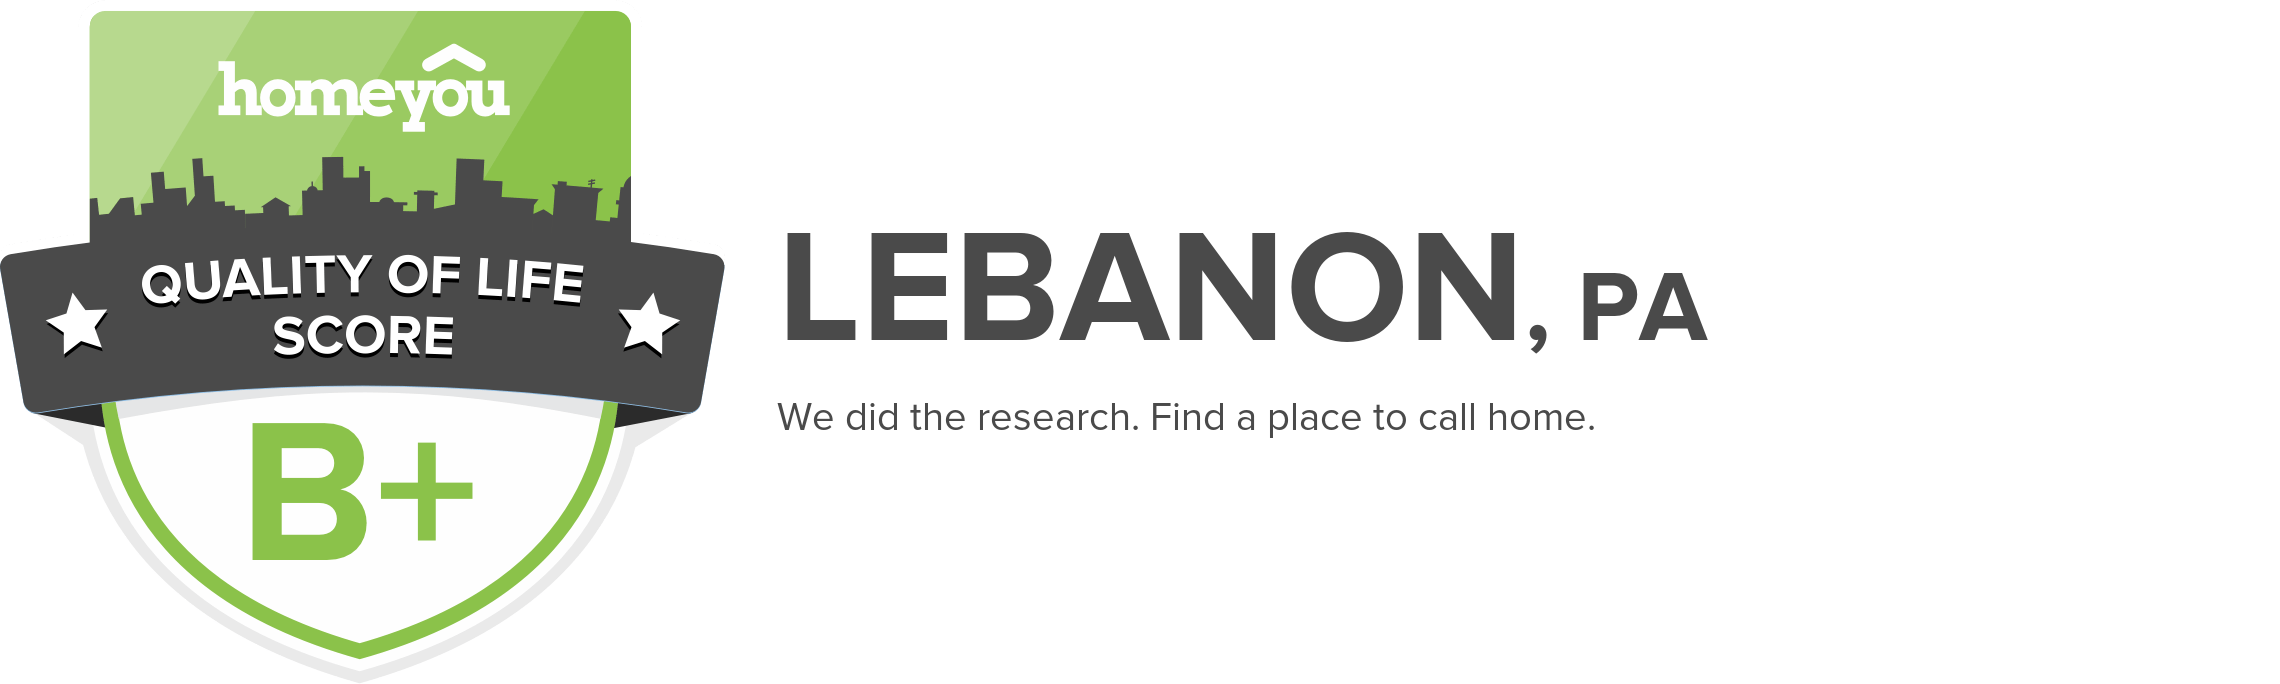 Lebanon, PA